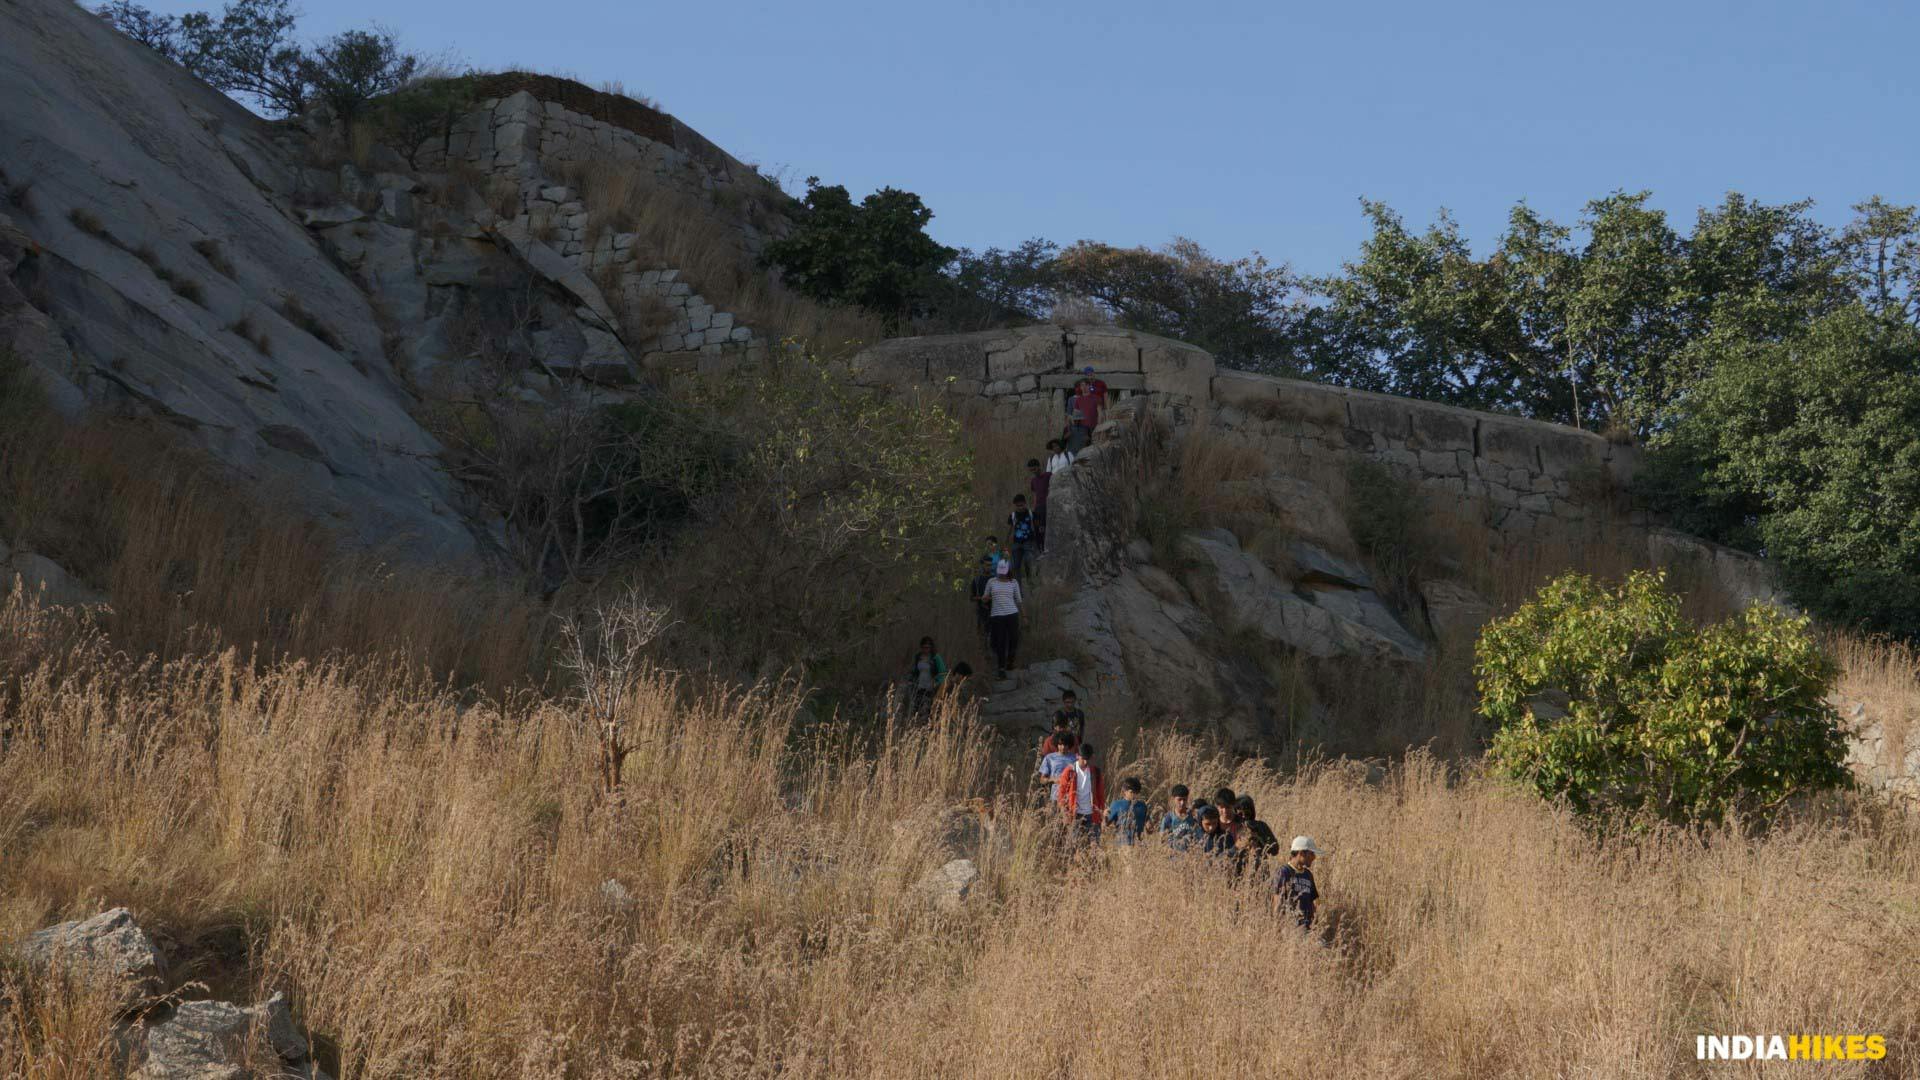 dfeda9a1 7d89 4445 8608 6ecdb95dd8e0 %2815%29 channarayana durga trek the last section of the climb to the top of the fort